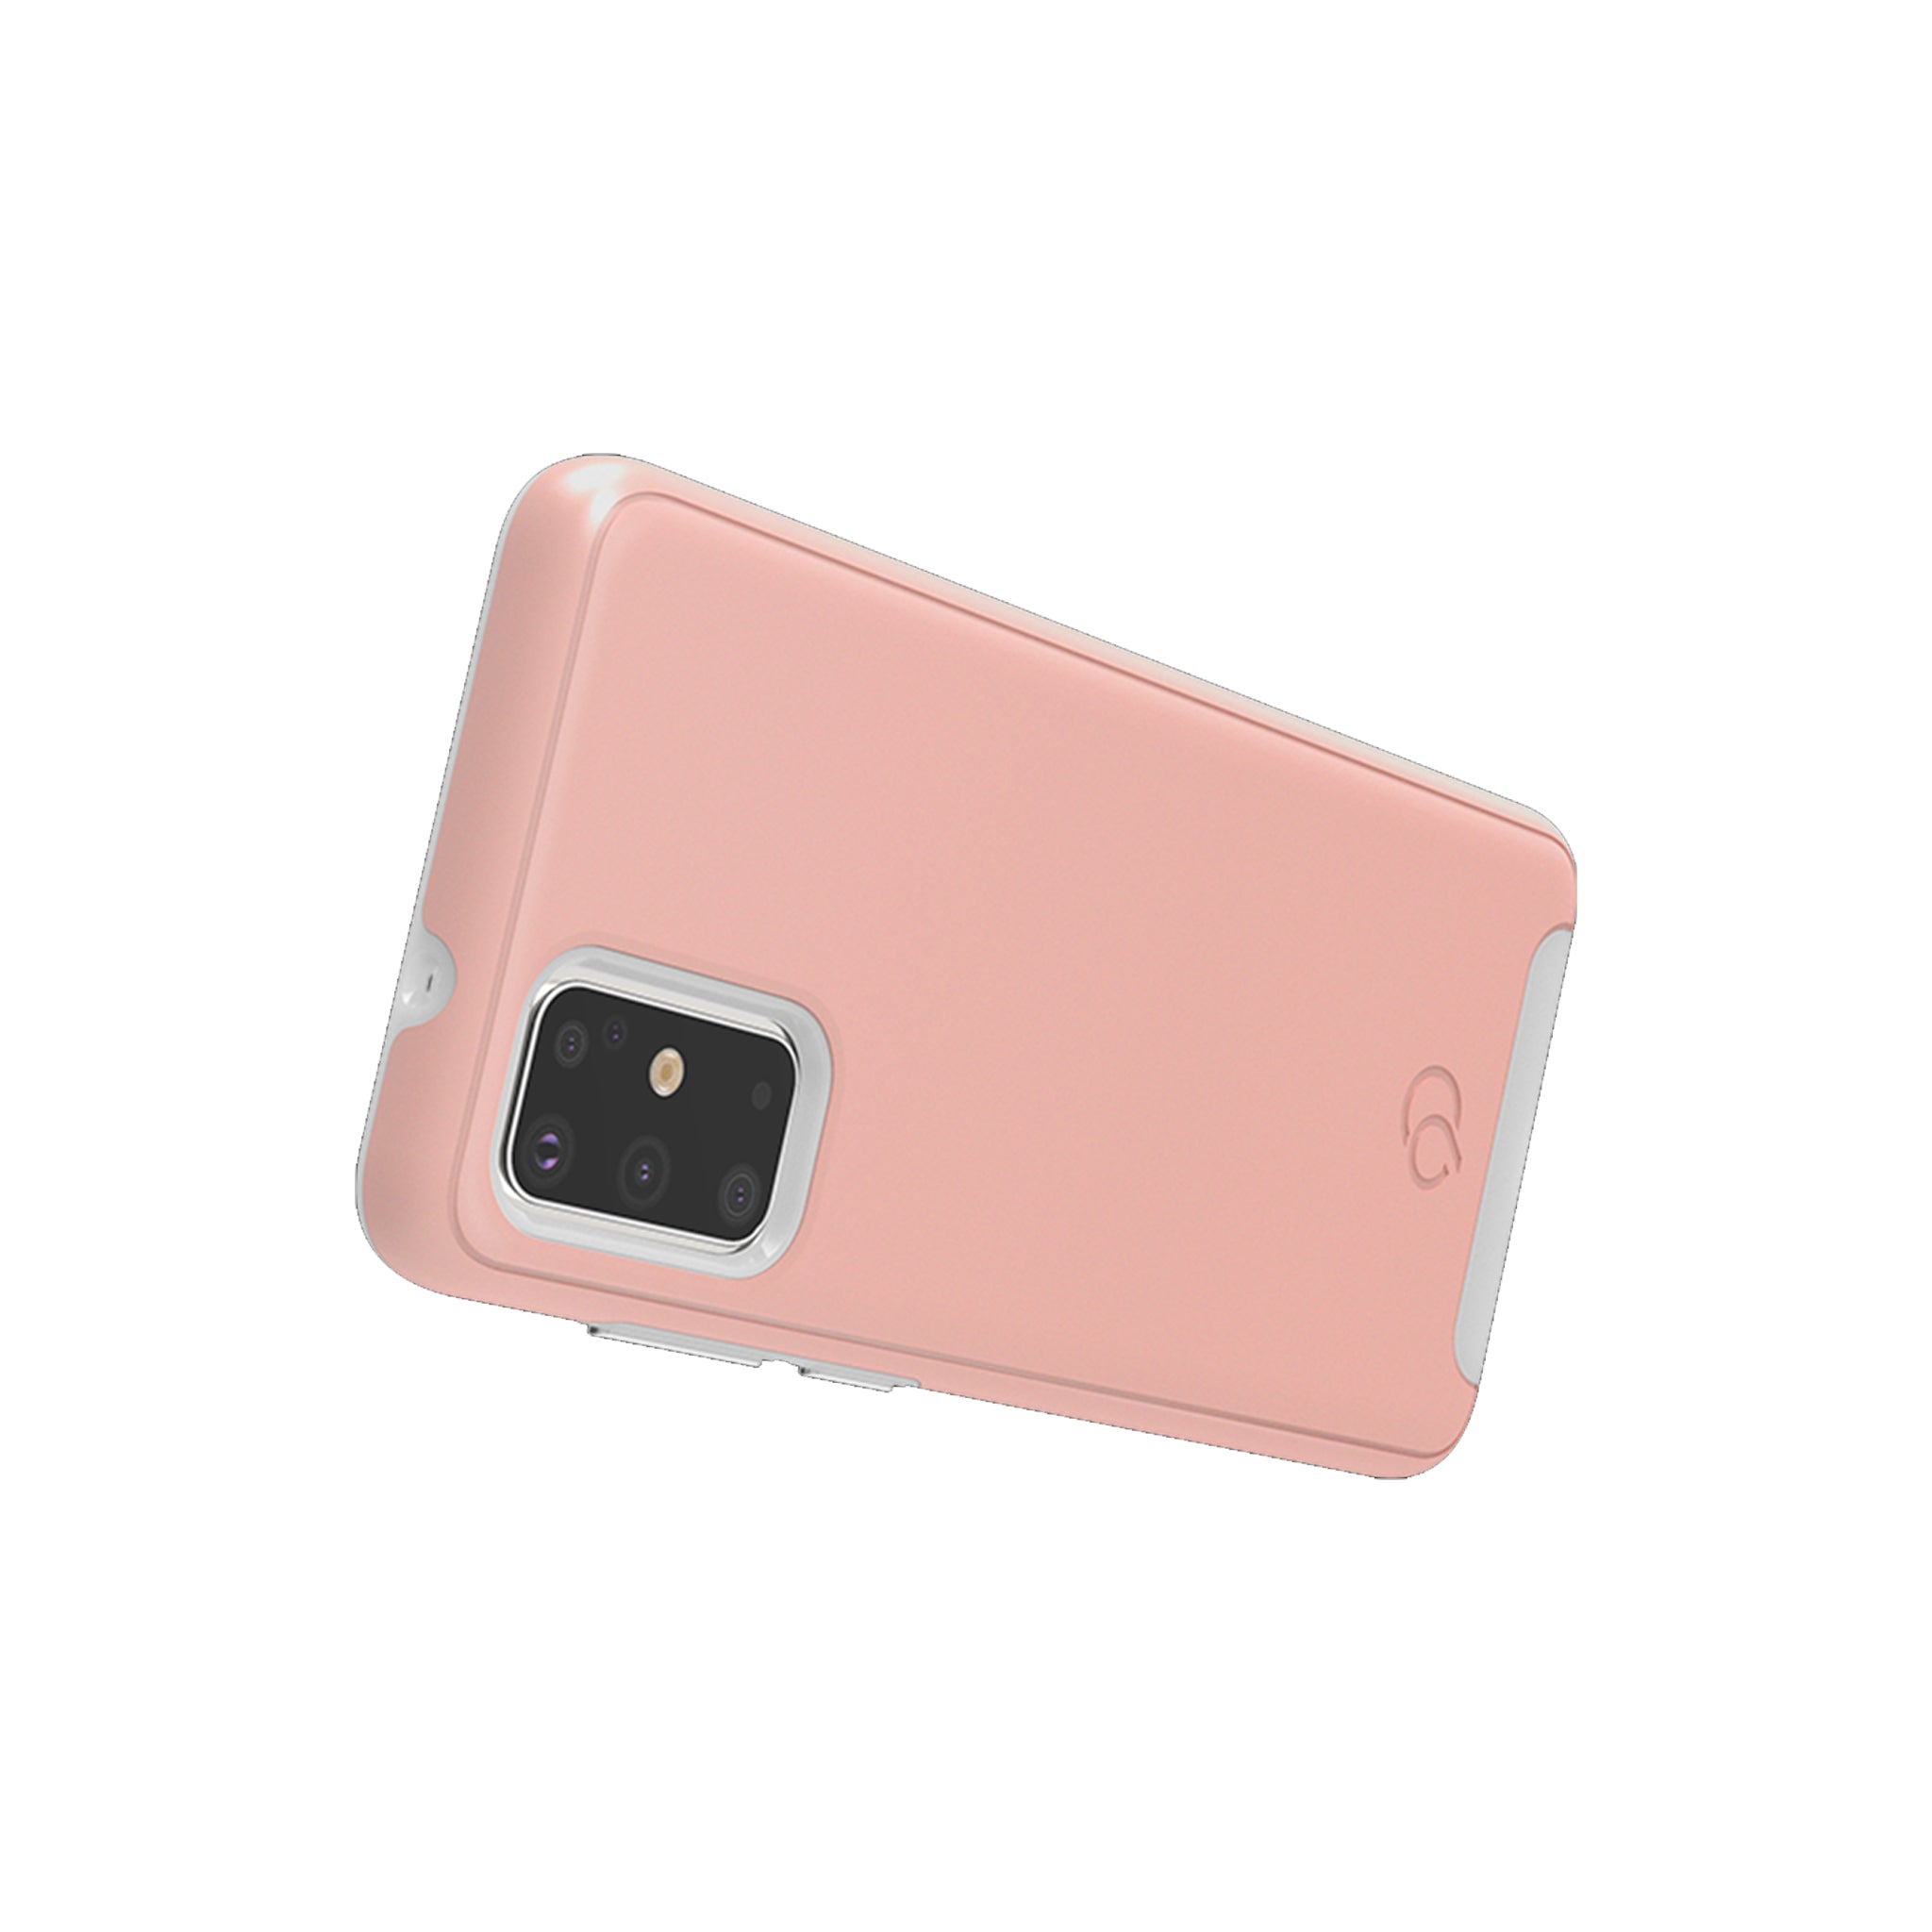 Nimbus9 - Cirrus 2 Case For Samsung Galaxy S20 Plus - Rose Clear